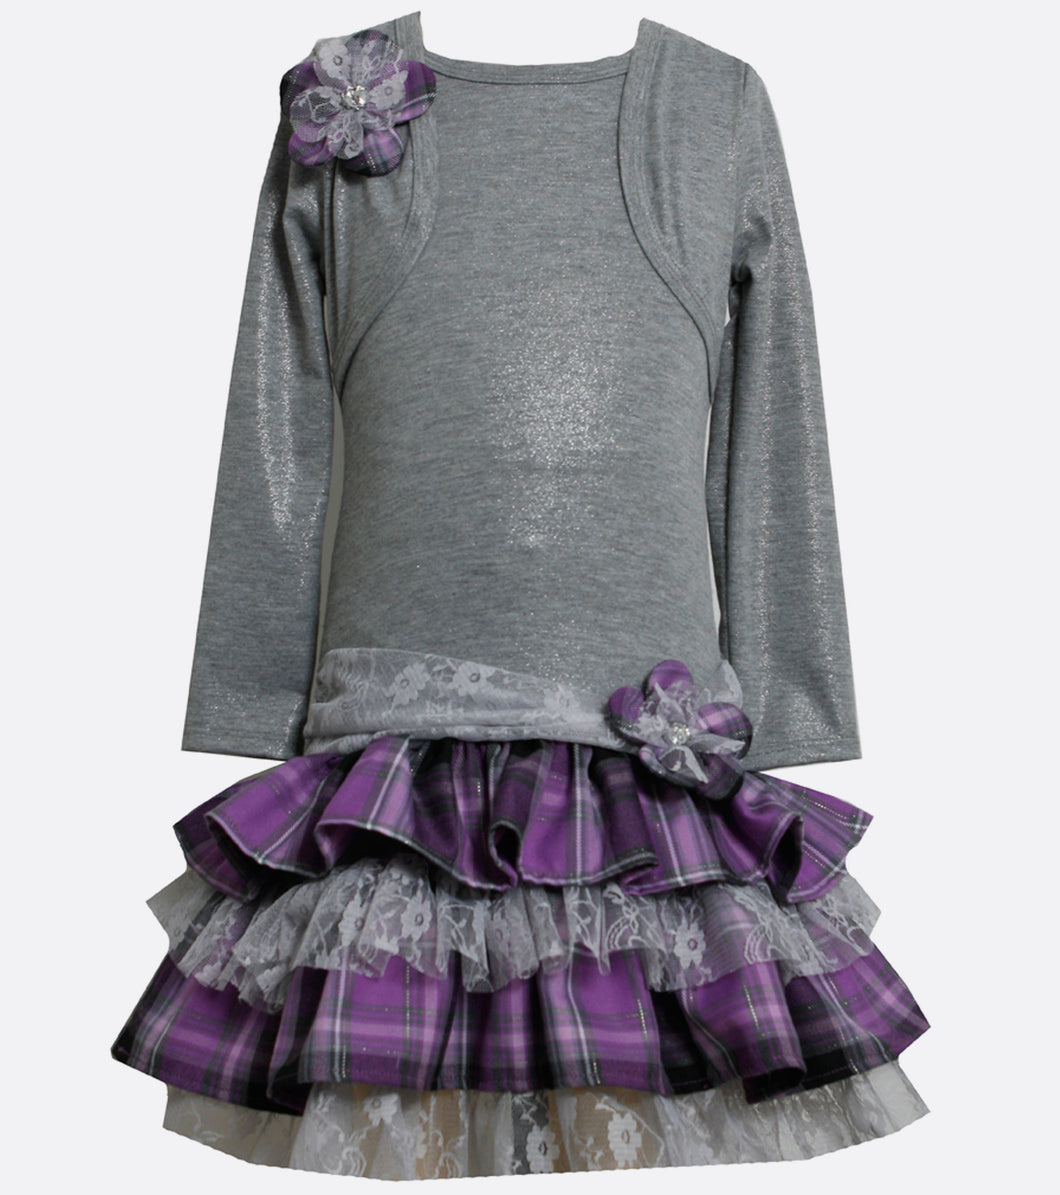 Girls gray and purple tiered dress